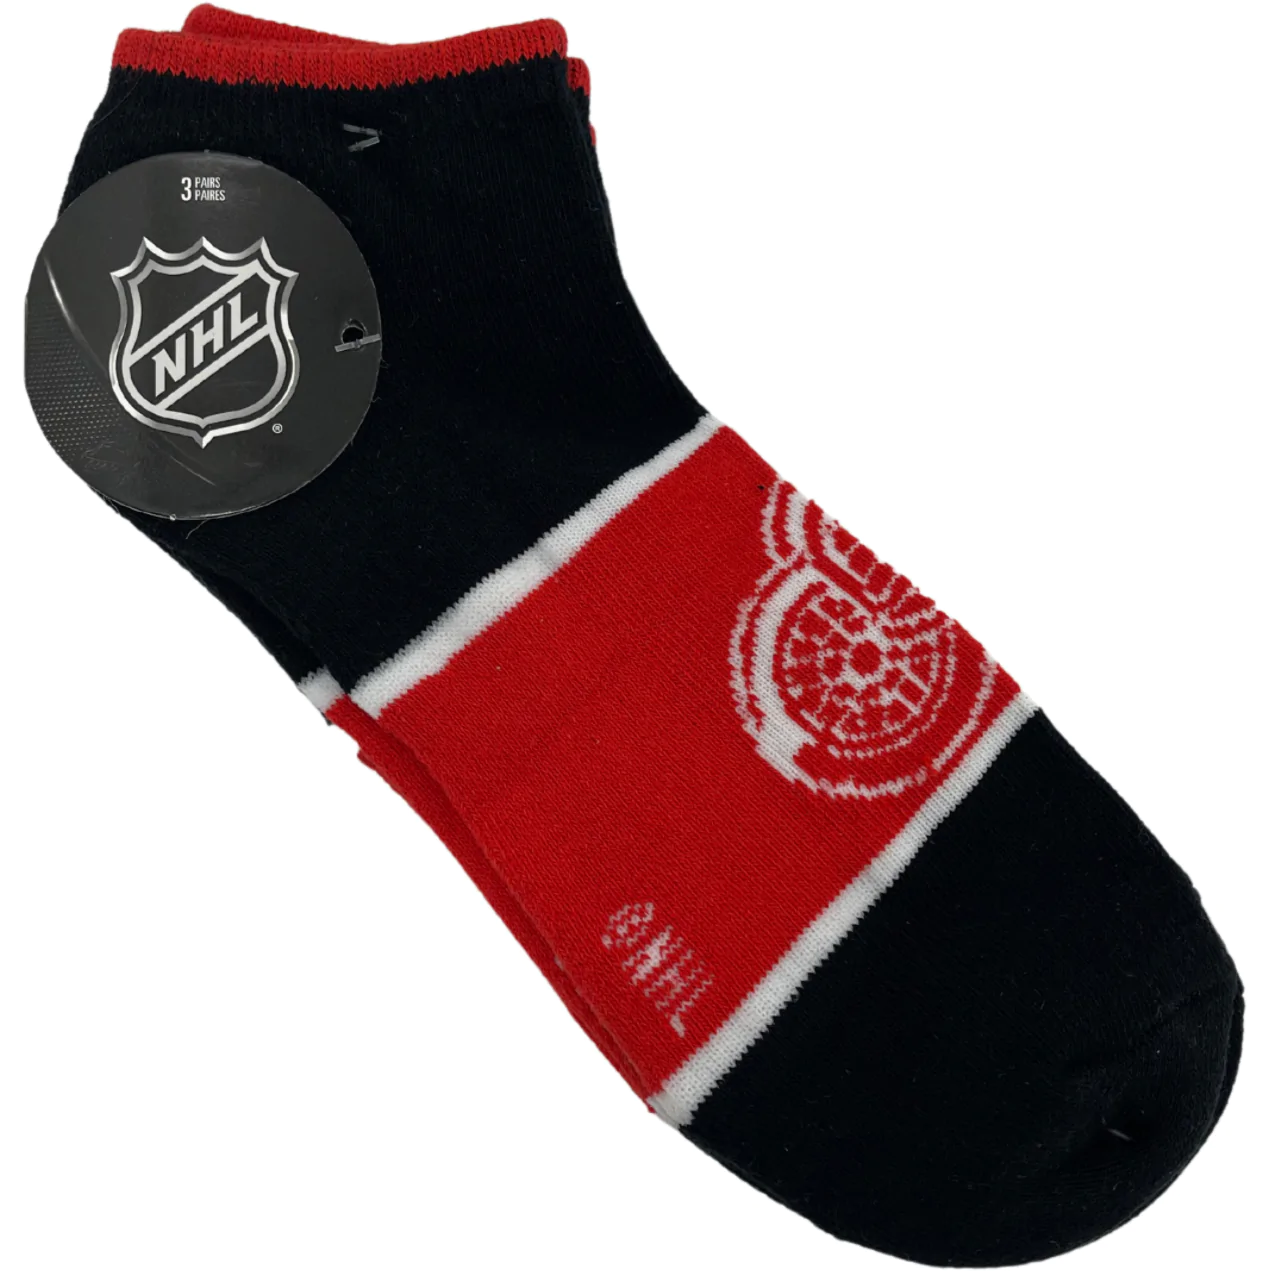 NHL Men's Socks / Detroit Red Wings / Ankle Socks / 3 Pack / Black and Red / Shoe Size 7-12